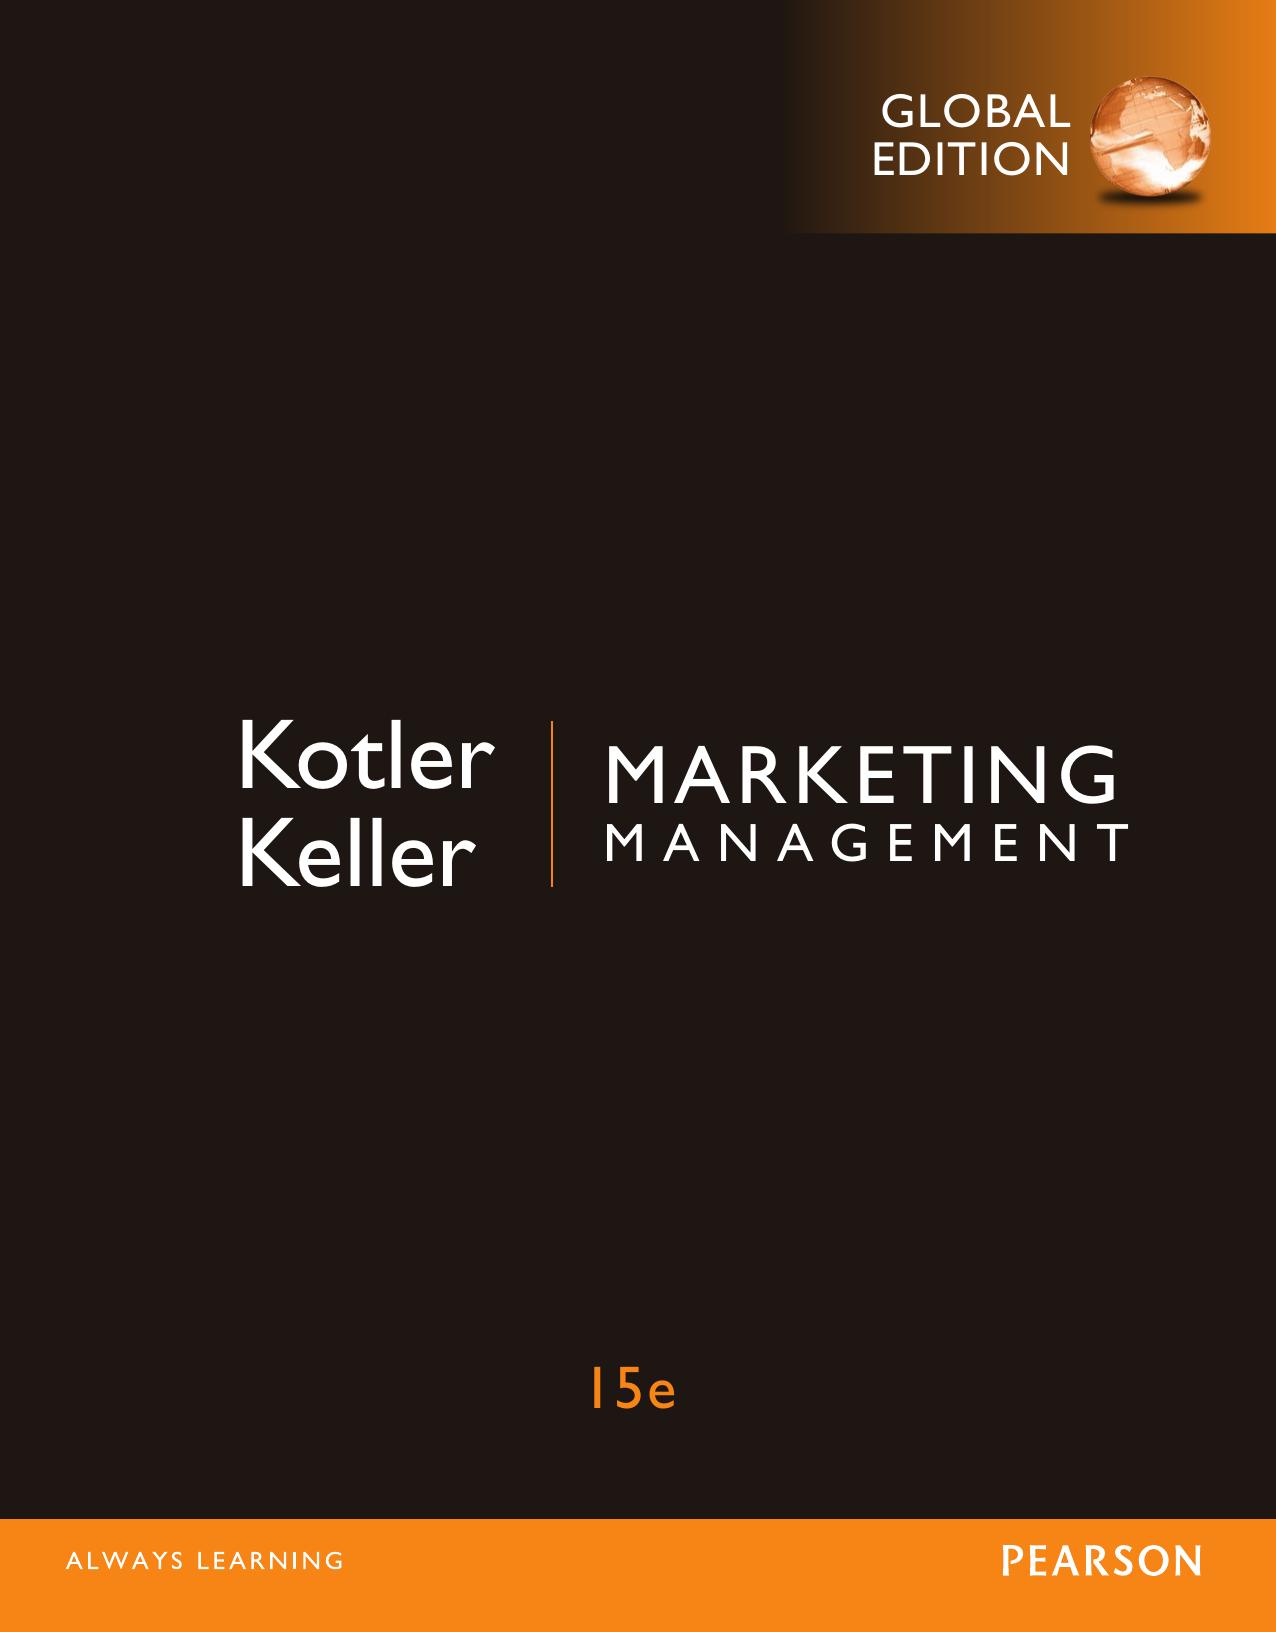 Kotler & Keller -- Marketing Management, 15th Global Ed 2016